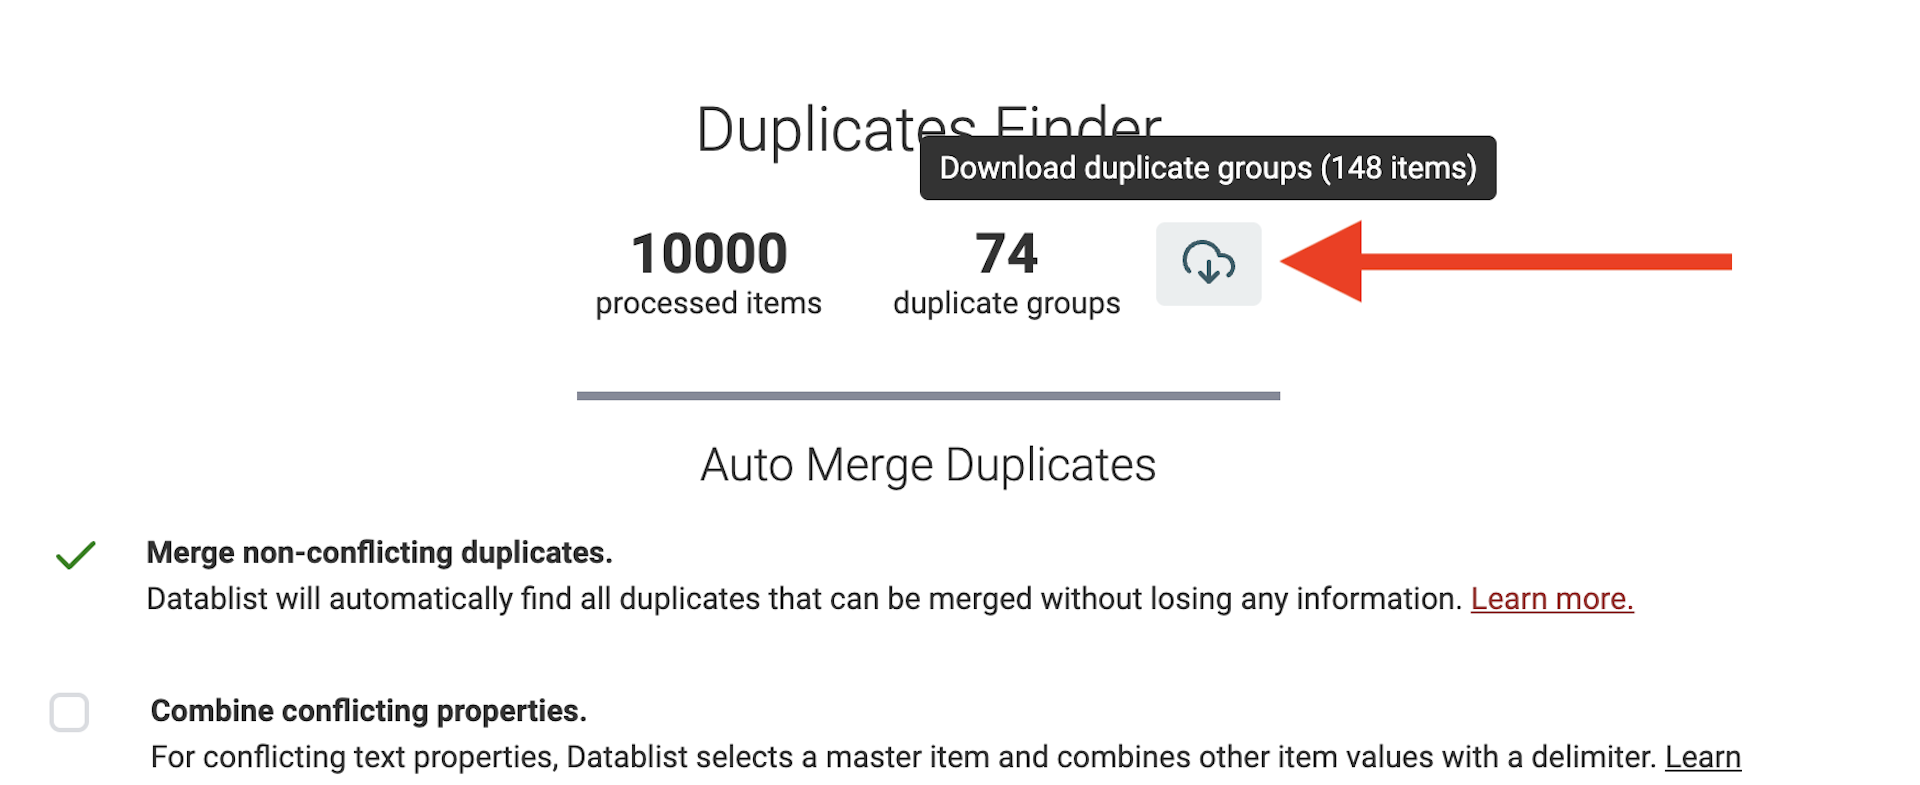 Download duplicate groups